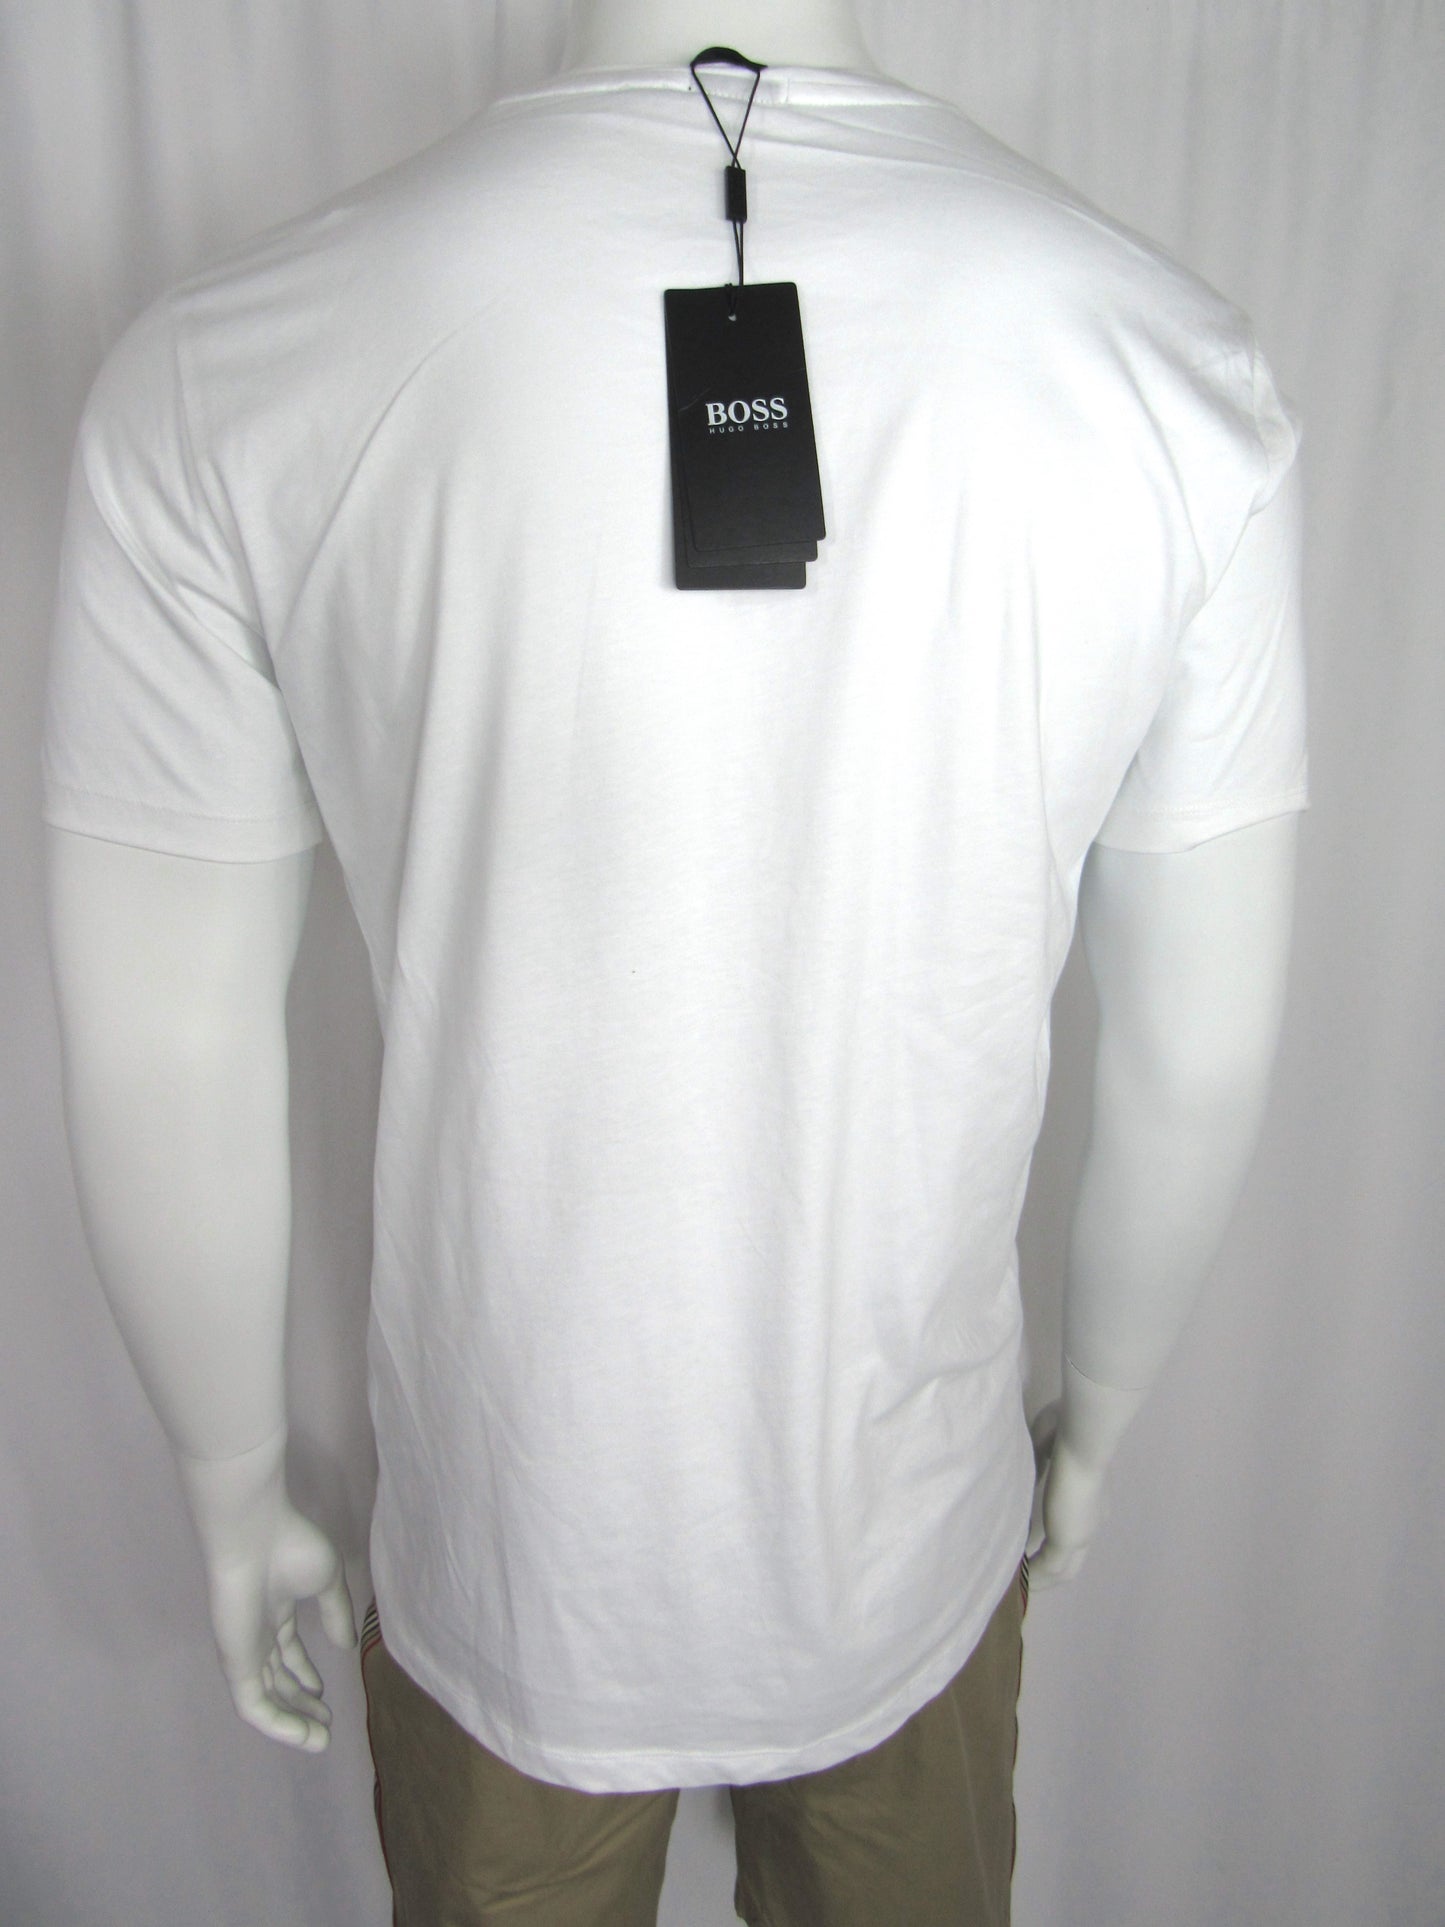 HUGO BOSS Graphic T-Shirt NWT - Size XL